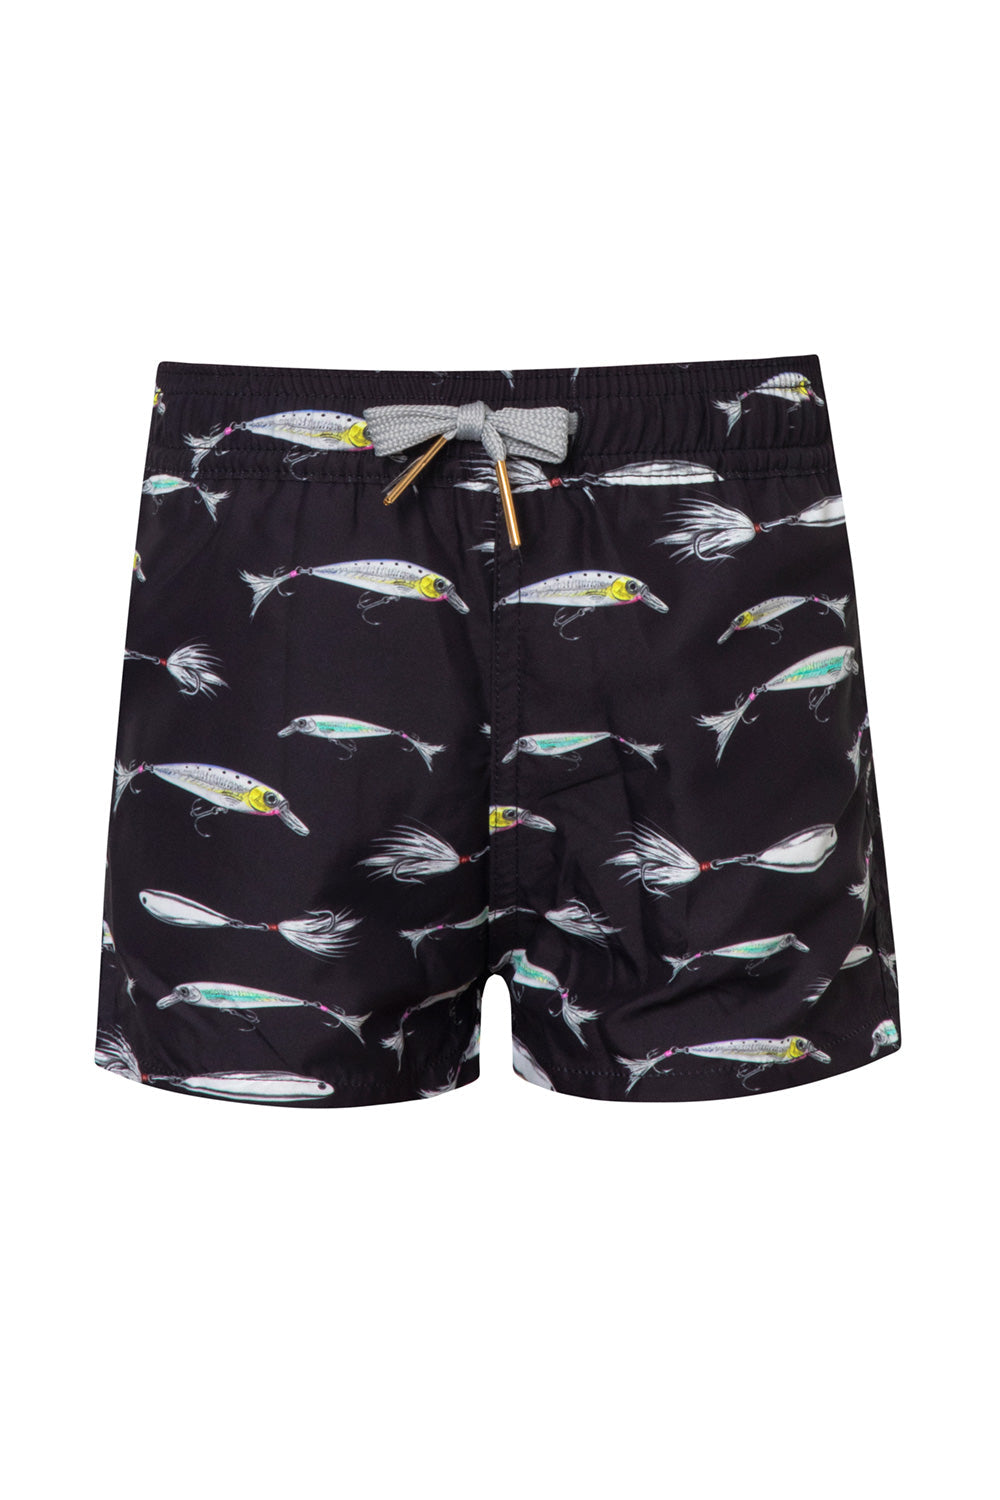 Mola Mola Ocean Lane Boy Swim Shorts